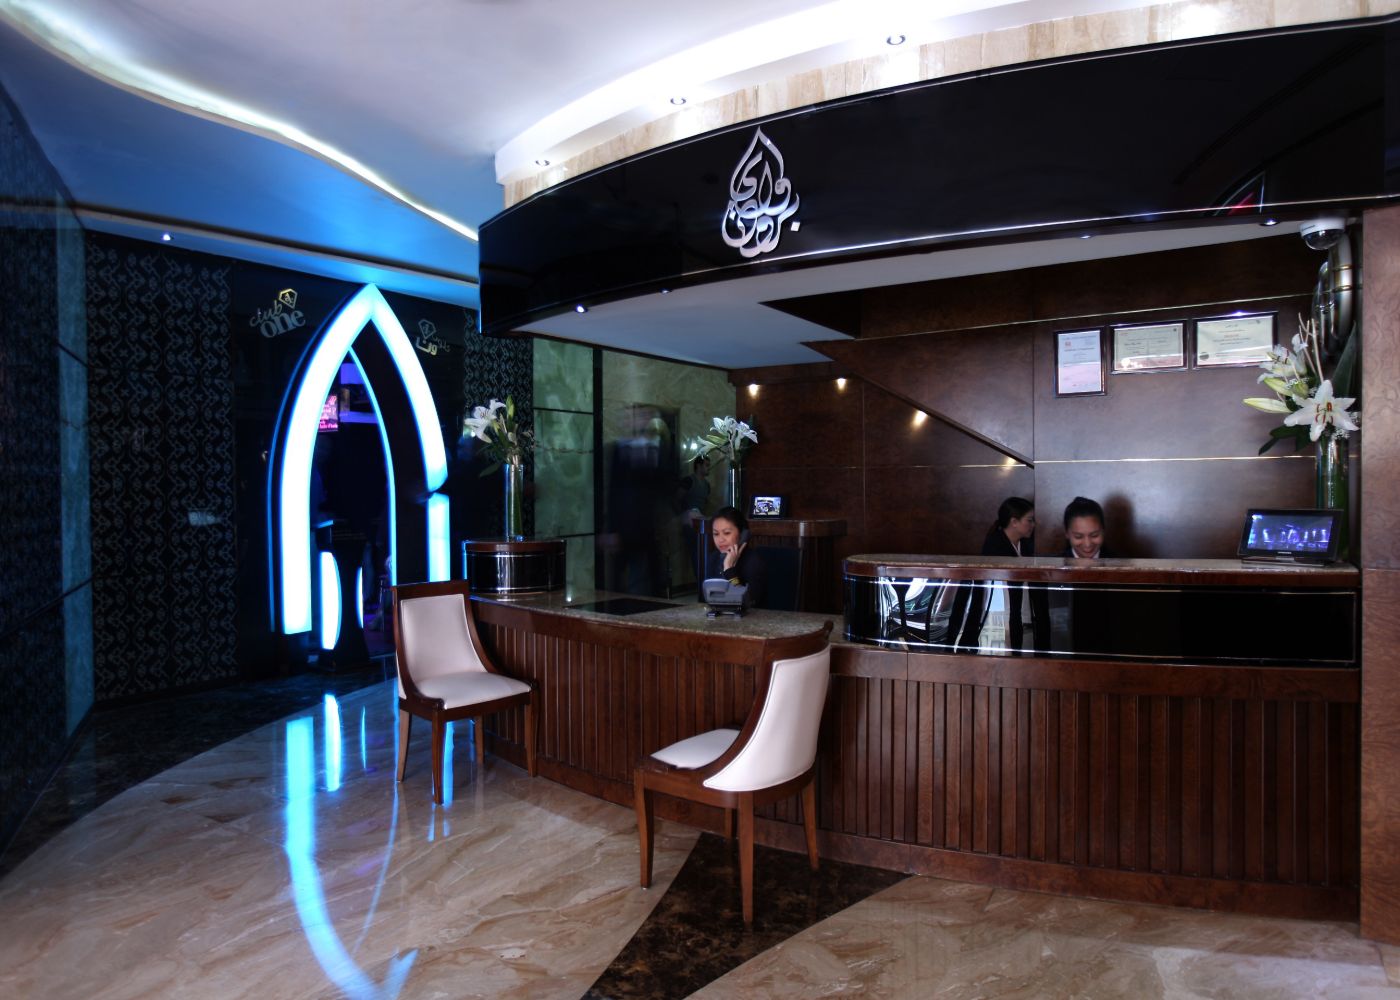 Broadway Hotel Deira Dubai - Amenities, Facilities, Services